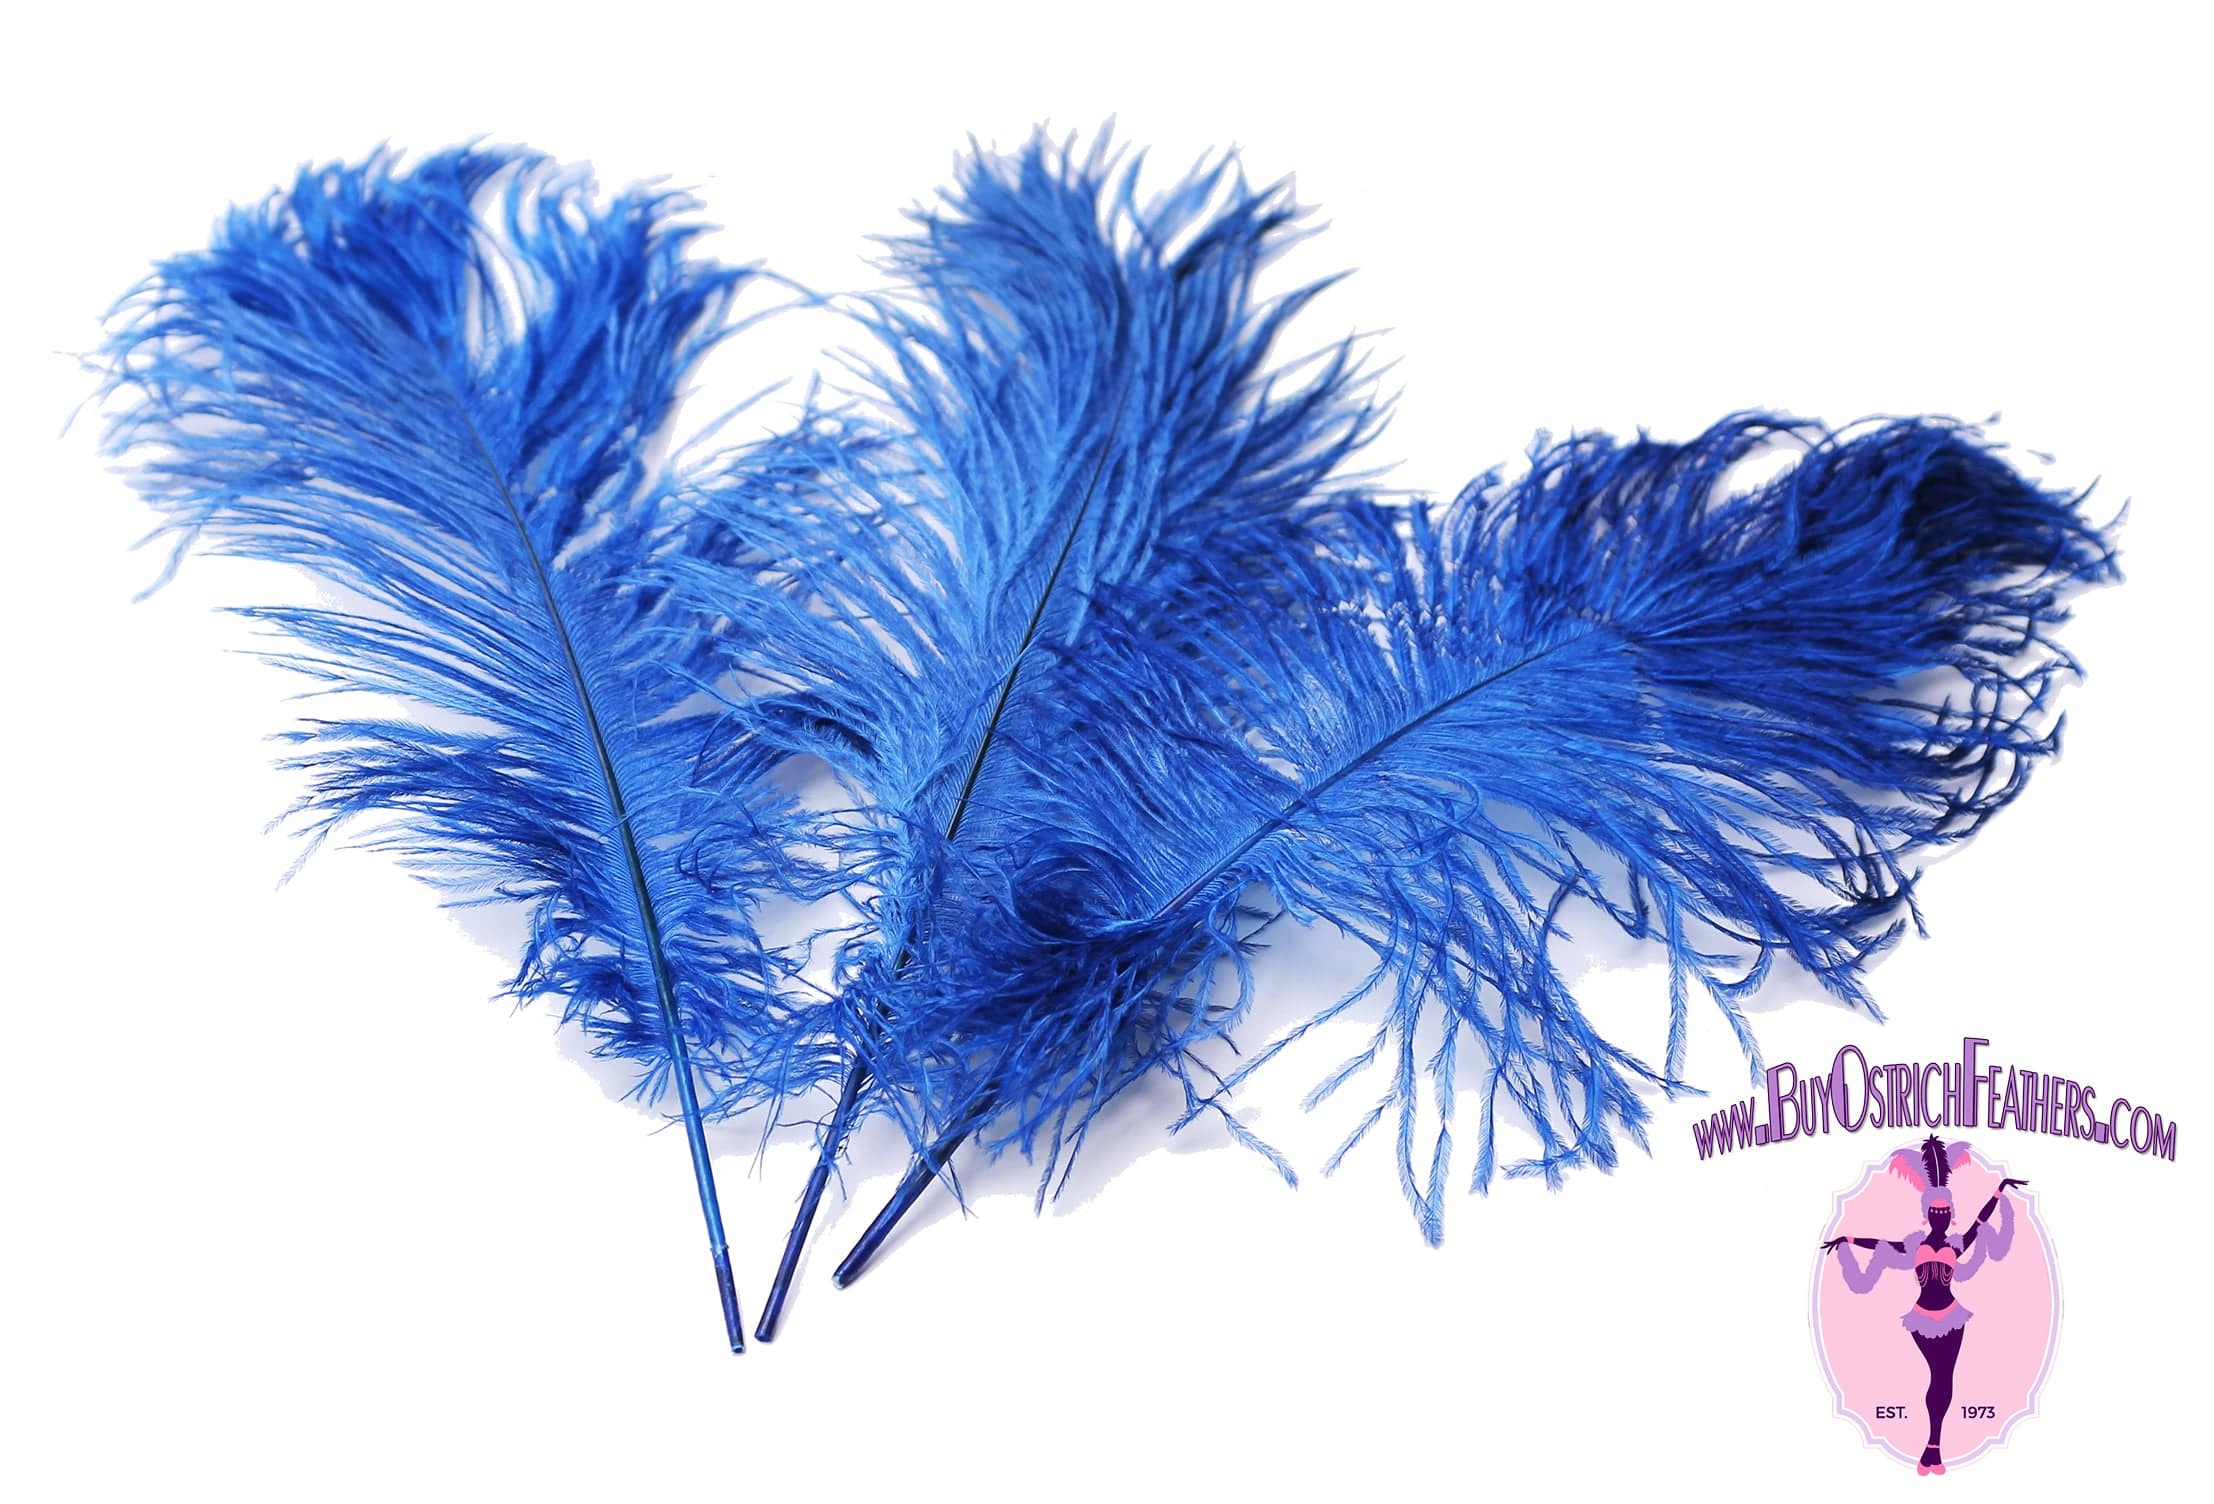 10PCS High Quality Ostrich Feathers Bulk large Multicolor Plume